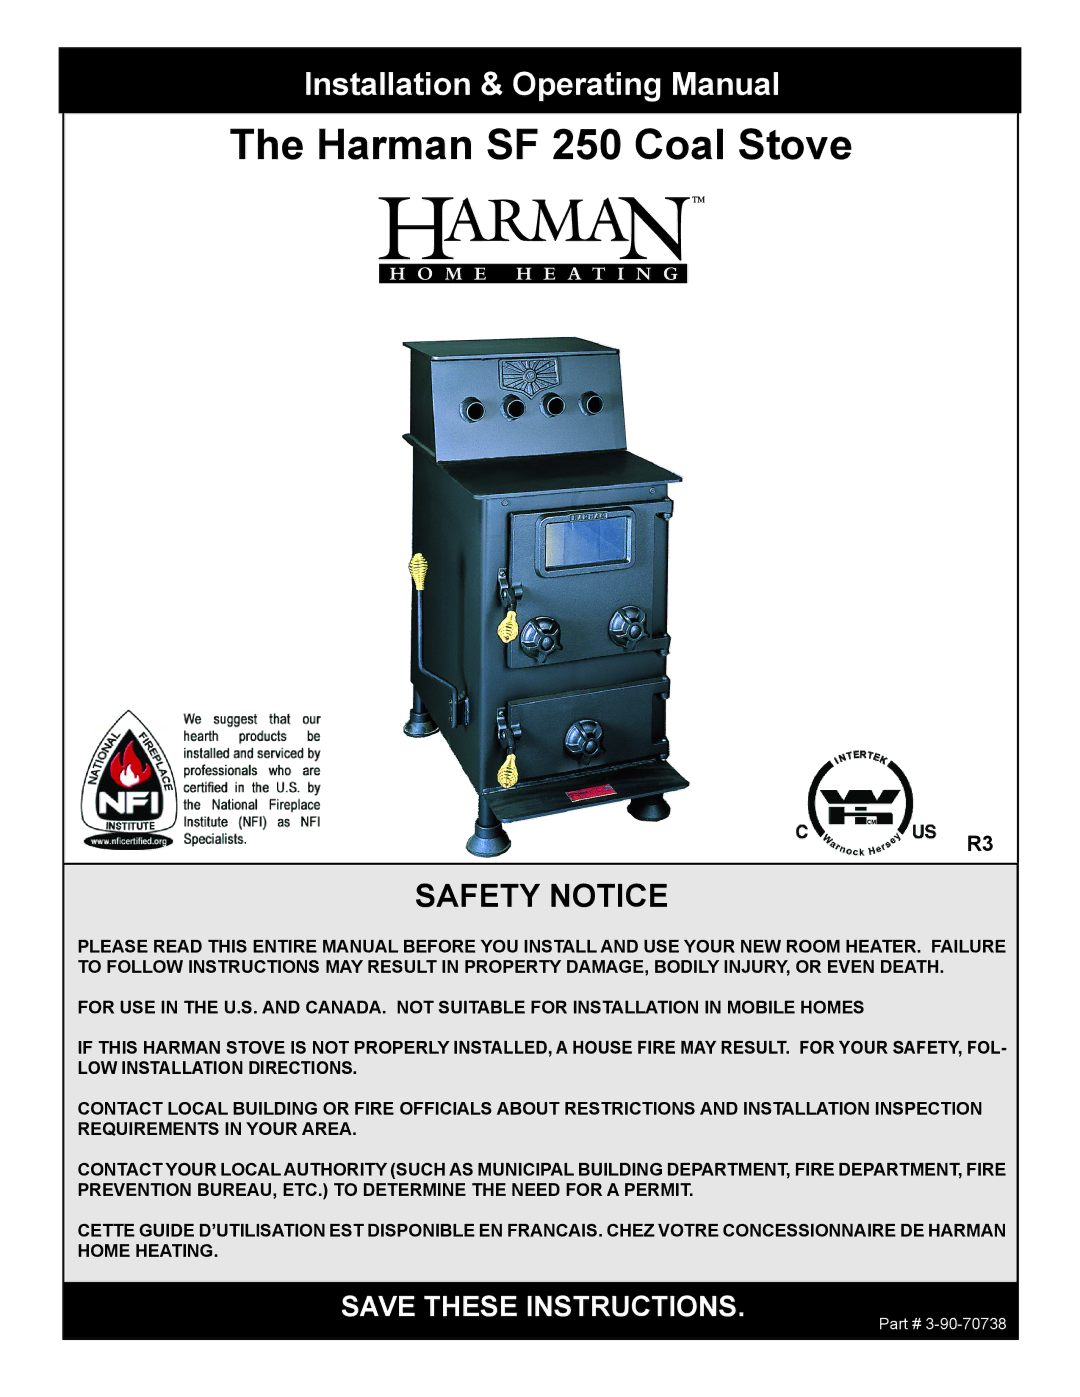 Harman Stove Company manual Harman SF 250 Coal Stove, Installation & Operating Manual 